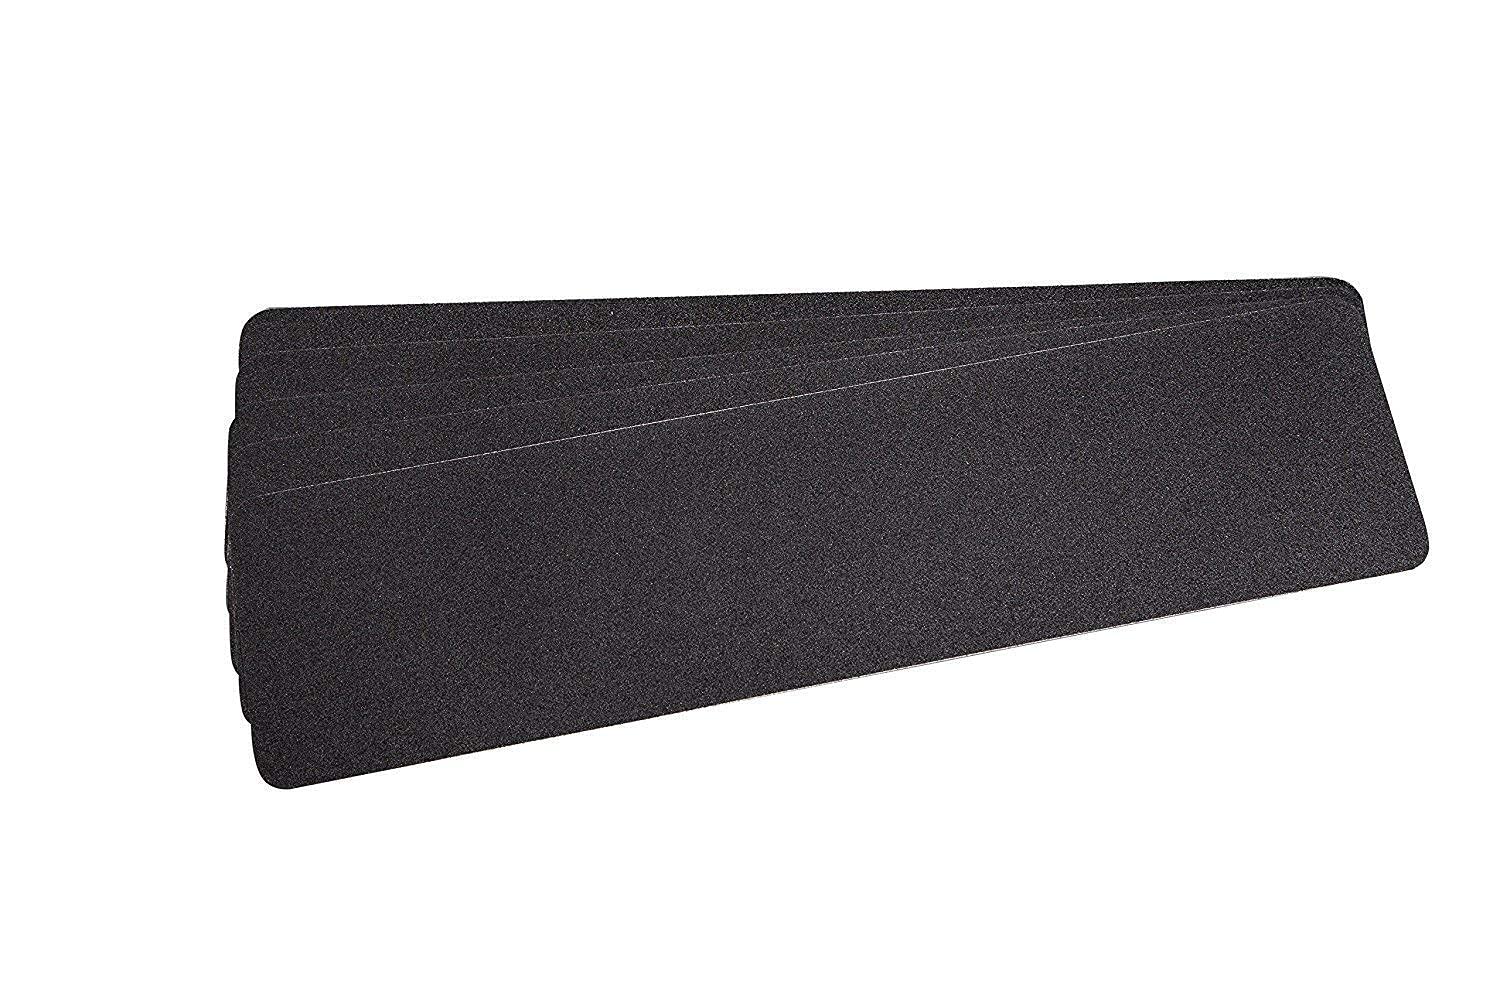 Anti Slip/Anti Skid Strip for Stairs, Slippery floors, Ramps - (15x60 cm, Black) LifeKrafts